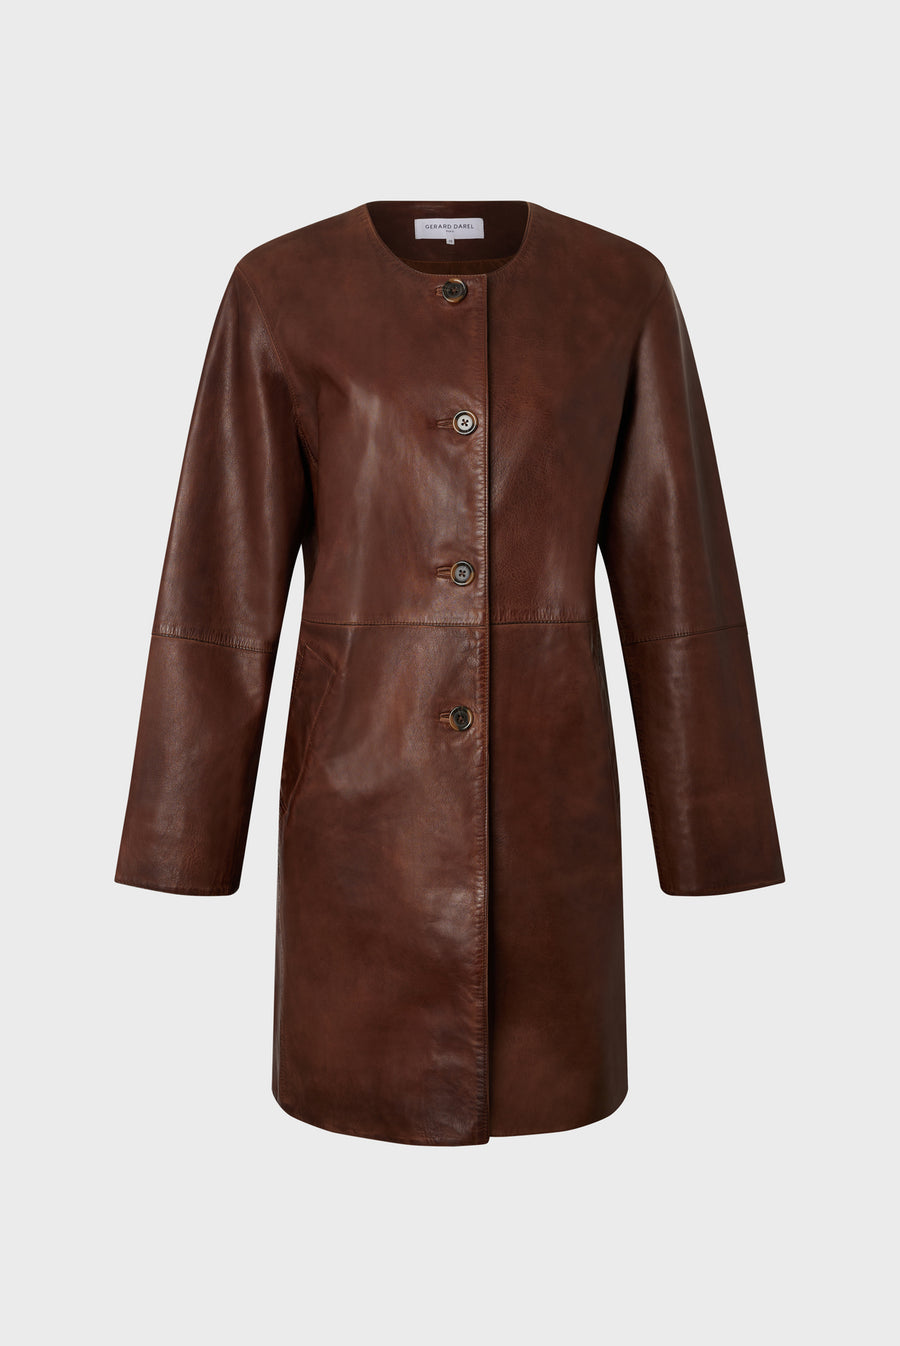 Leather Garment Nalinha Dyy02y009 Brown